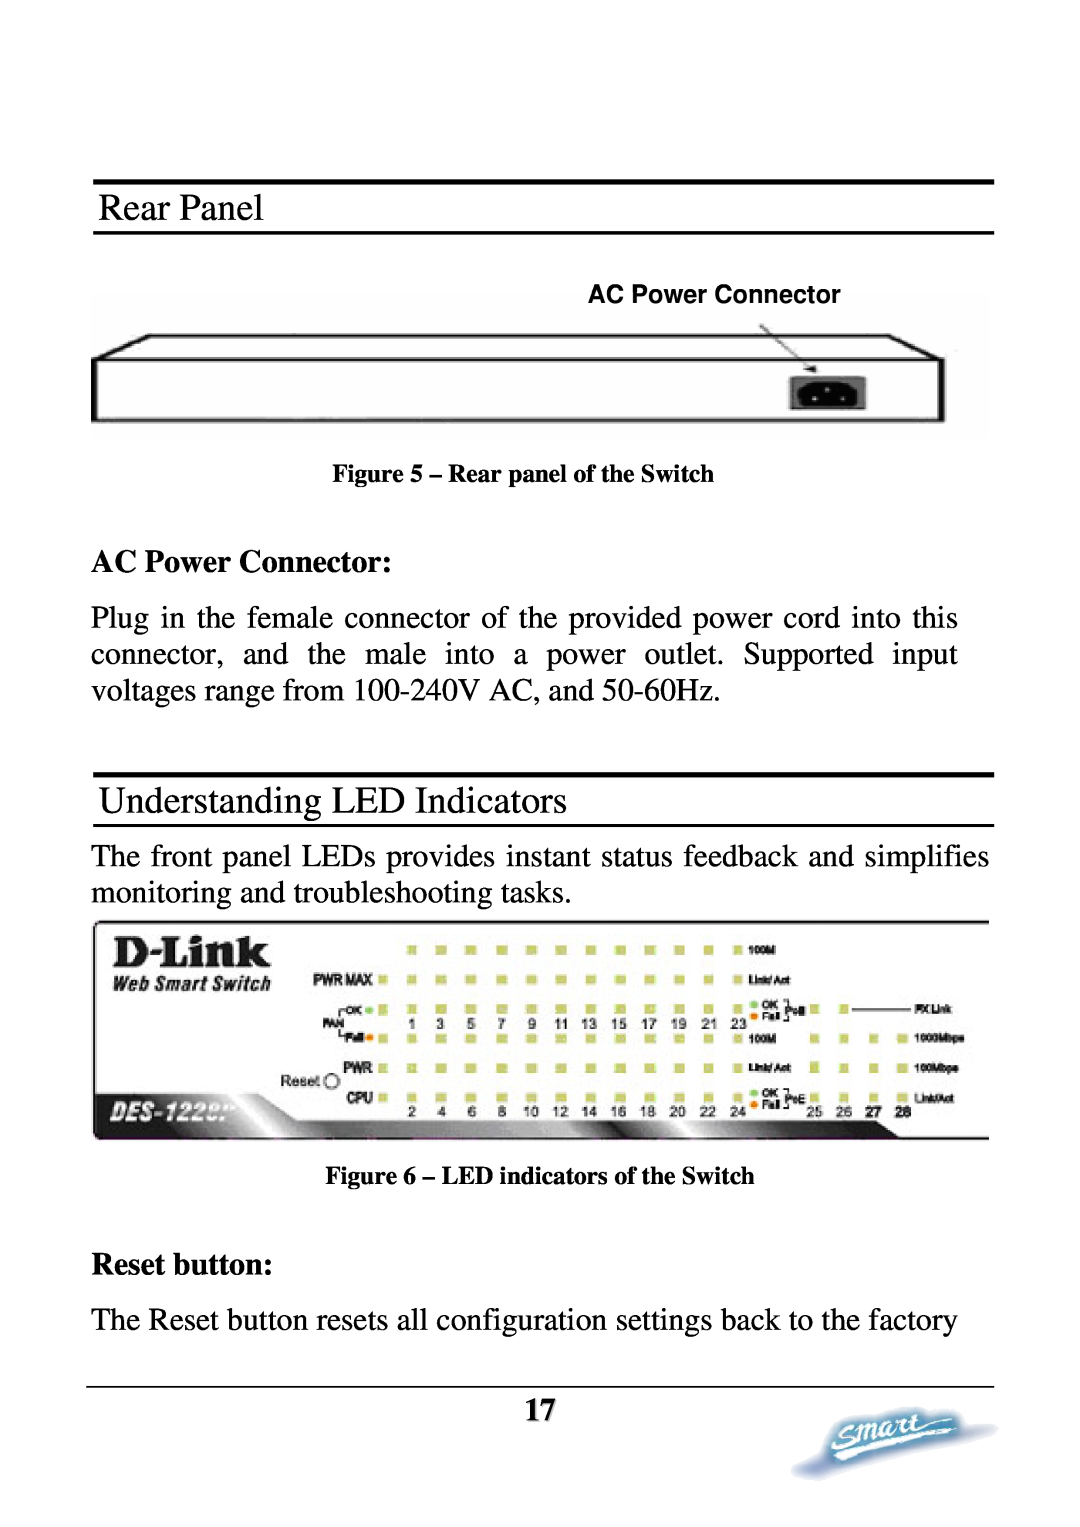 D-Link DES-1228P user manual Rear Panel, Understanding LED Indicators, AC Power Connector, Reset button 